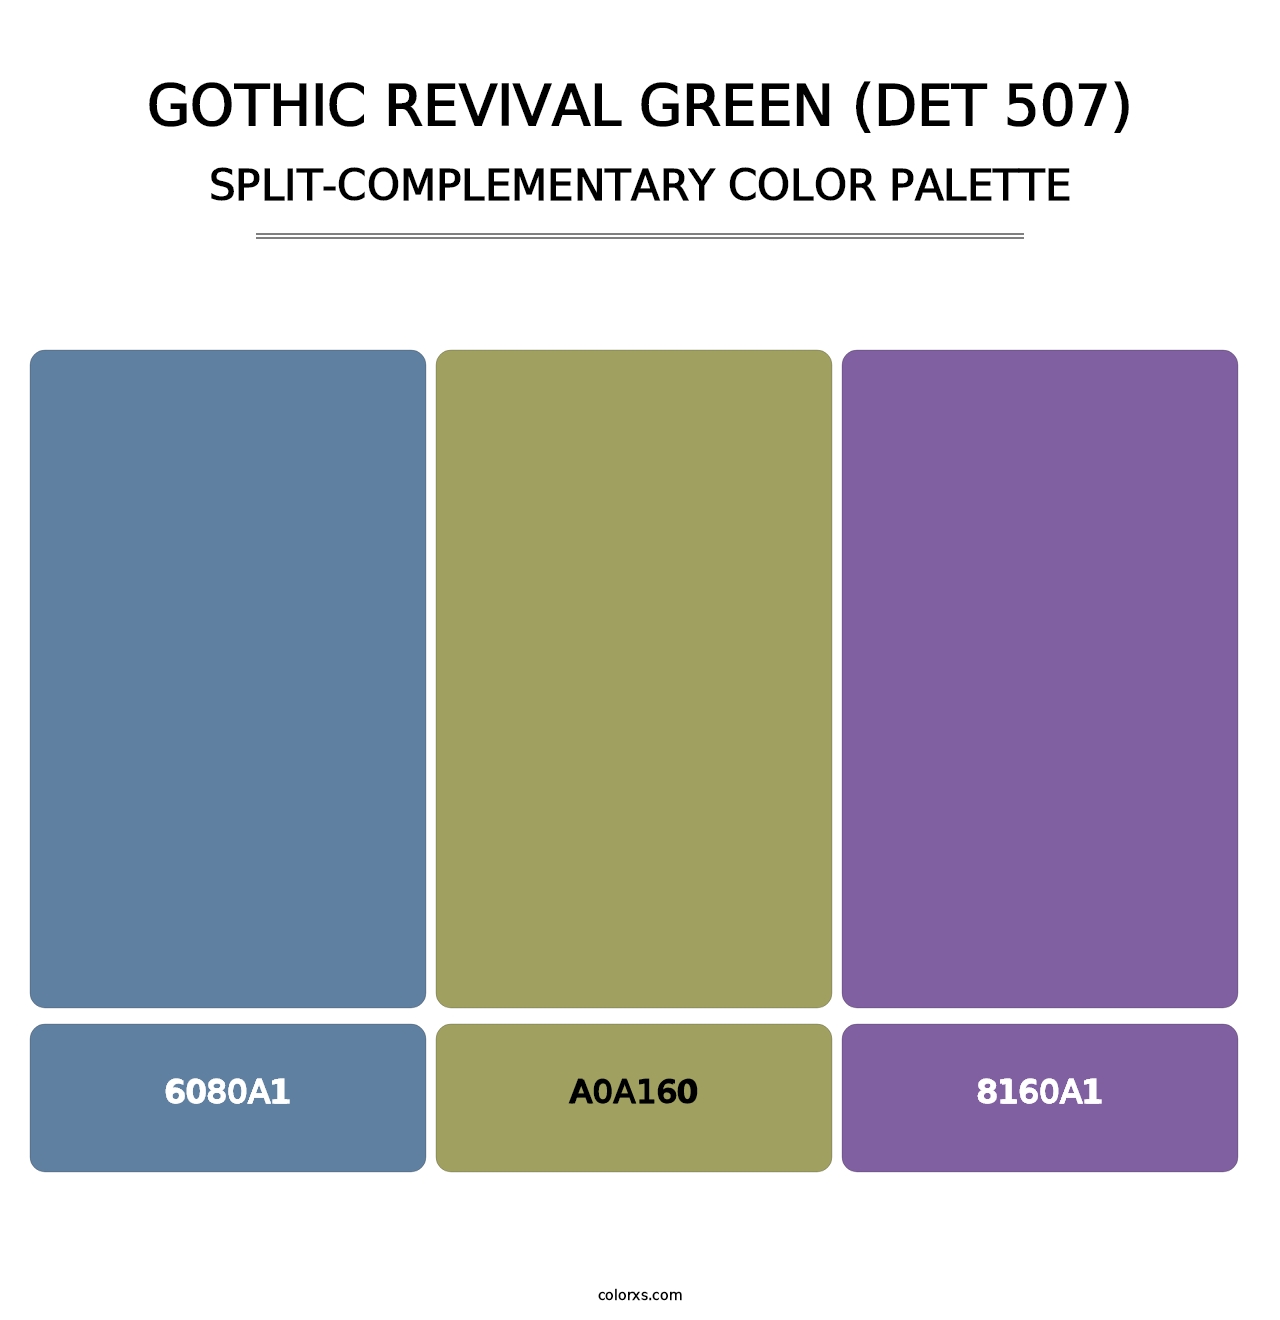 Gothic Revival Green (DET 507) - Split-Complementary Color Palette